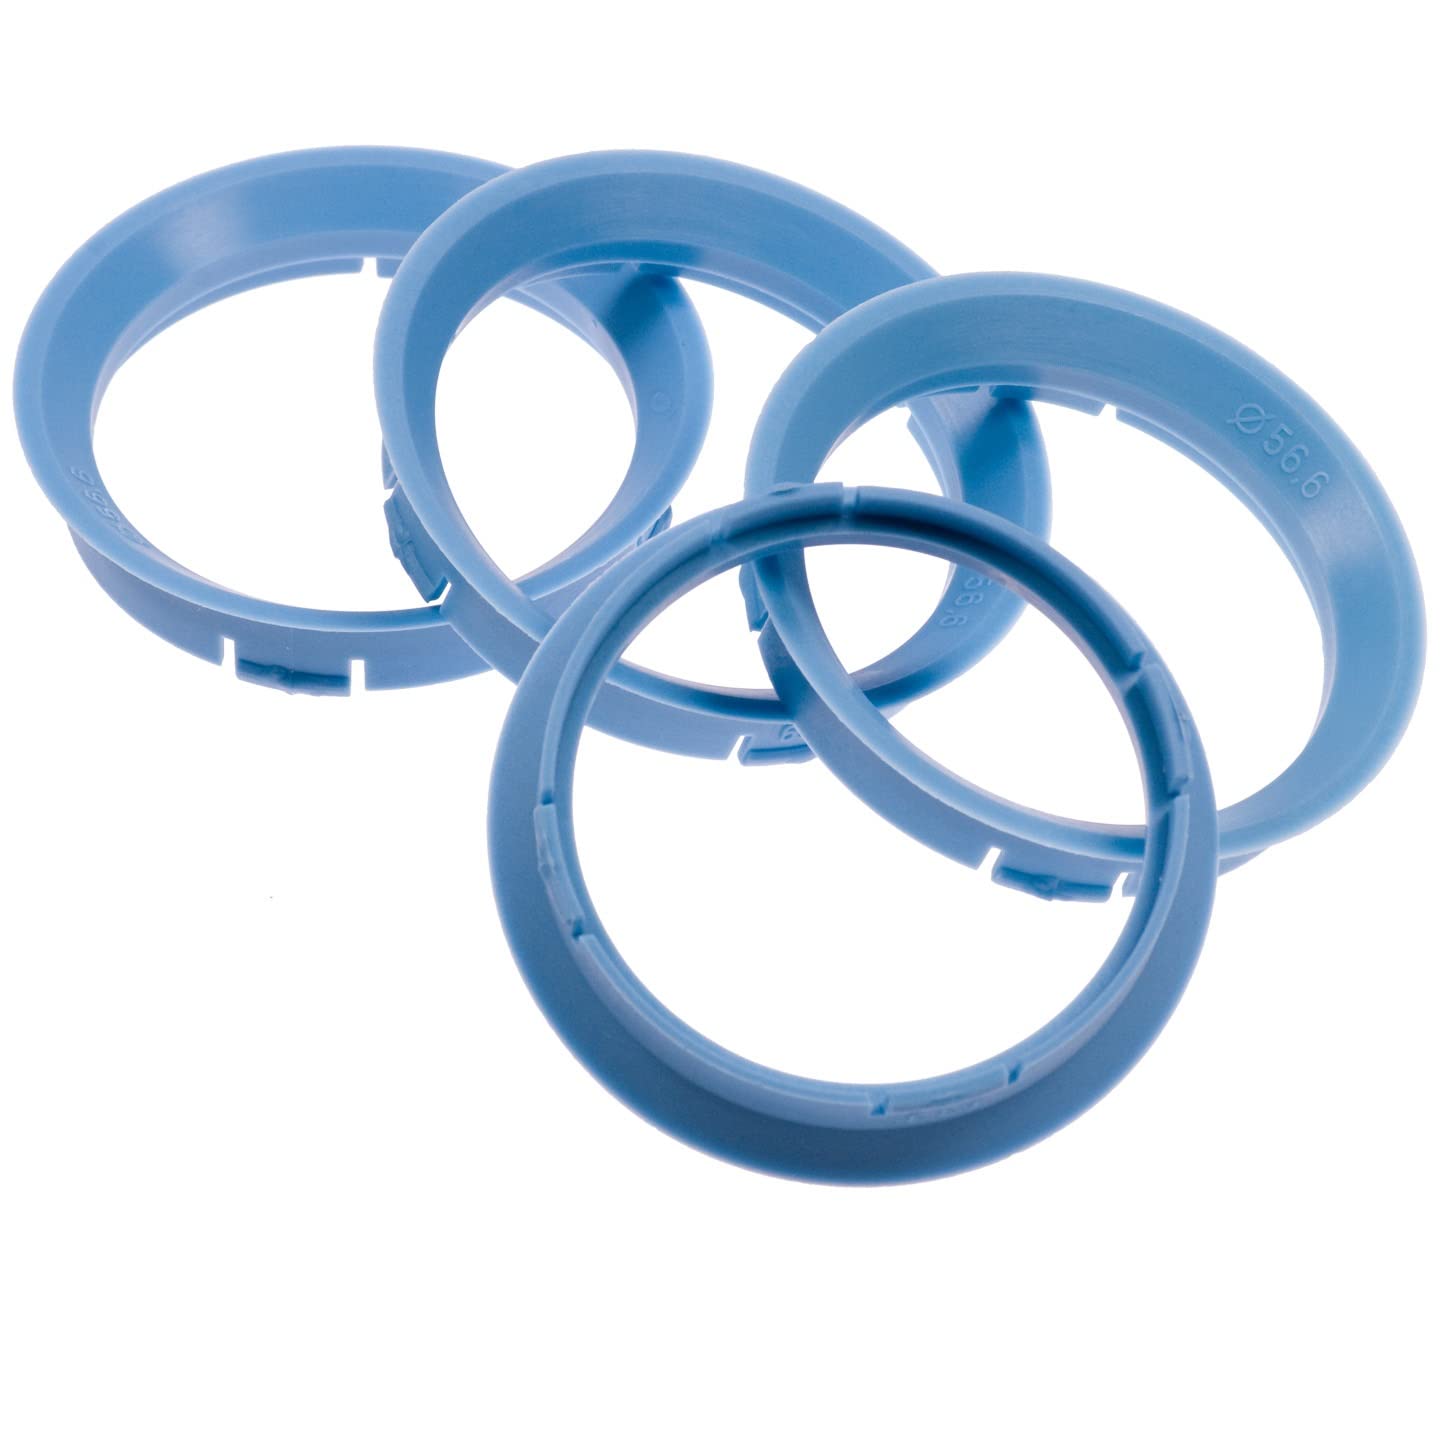 4X Zentrierringe 63,3 x 56,6 mm hellblau Felgen Ringe Made in Germany von RKC